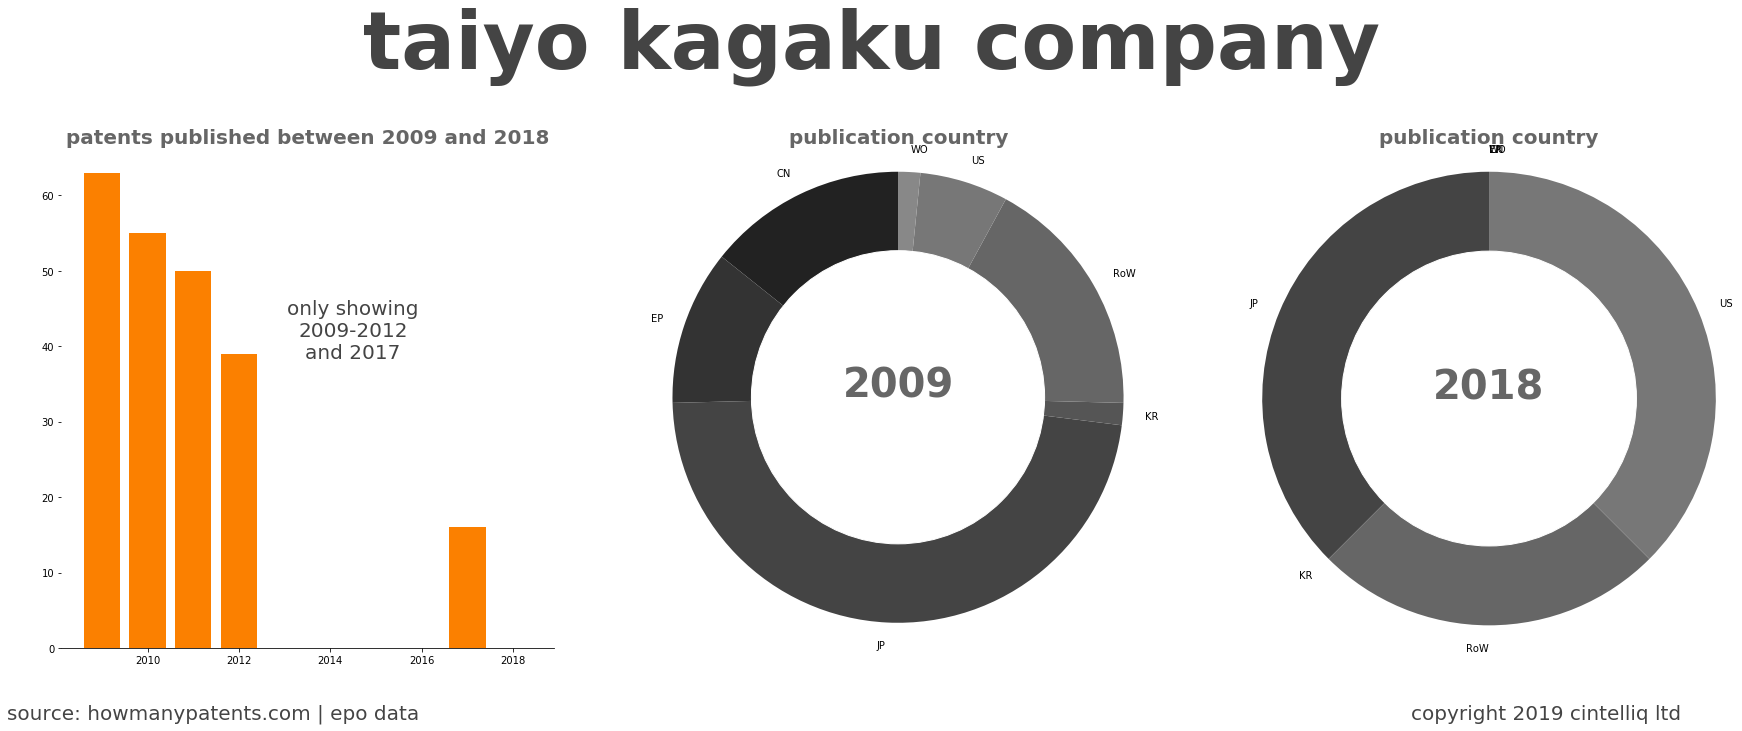 summary of patents for Taiyo Kagaku Company